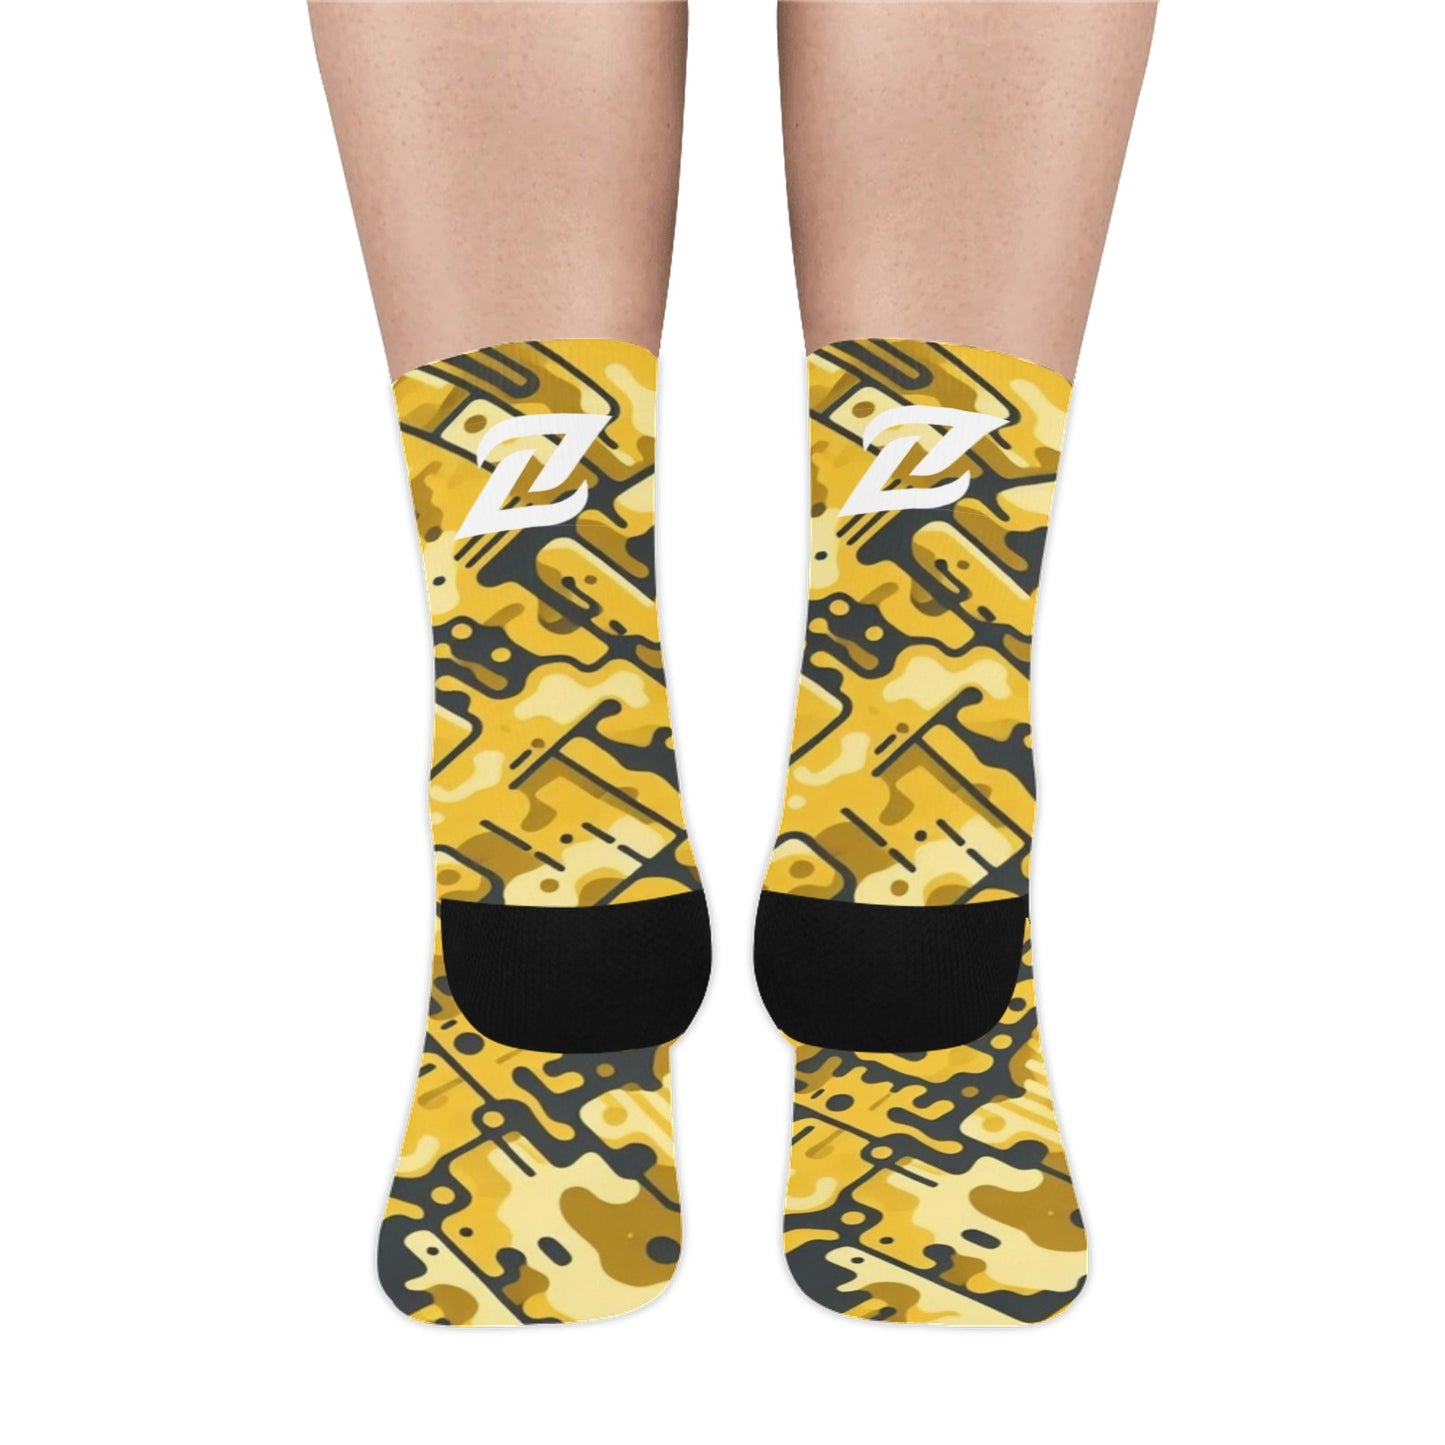 Zen Socks - Yellow Camo